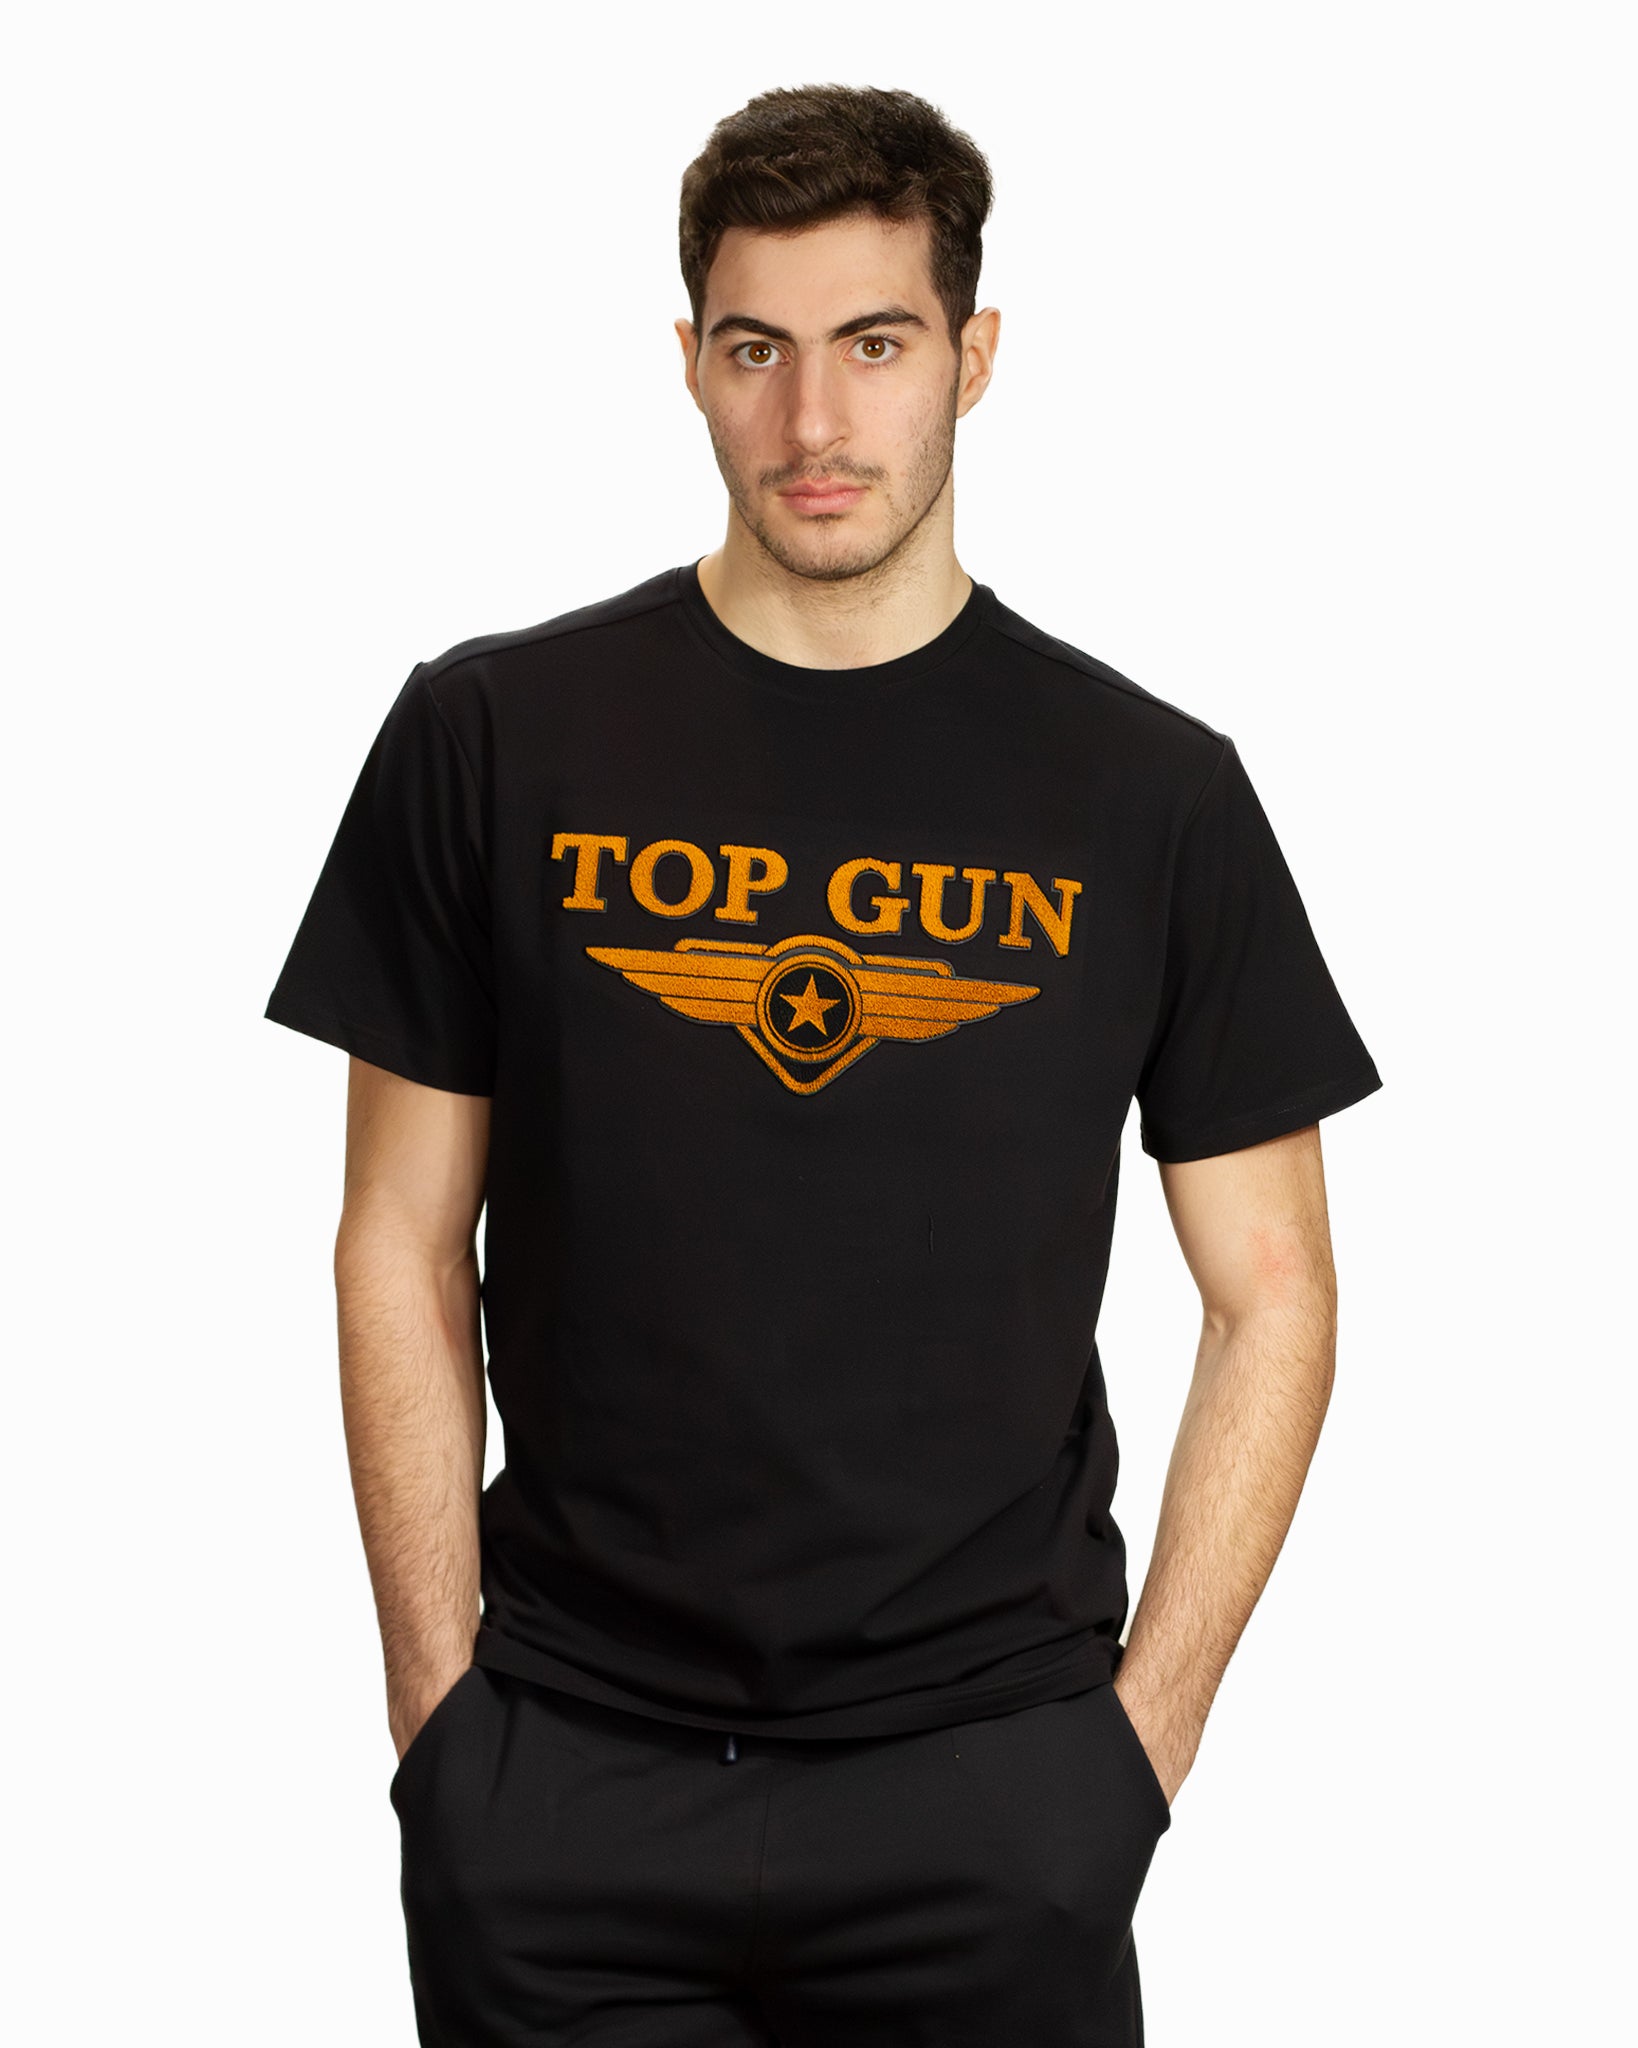 TEE | Gun EMBROIDERED Store Original TOP TOP GUN – GUN® Clothing LOGO GUN | Top TOP T-shirts